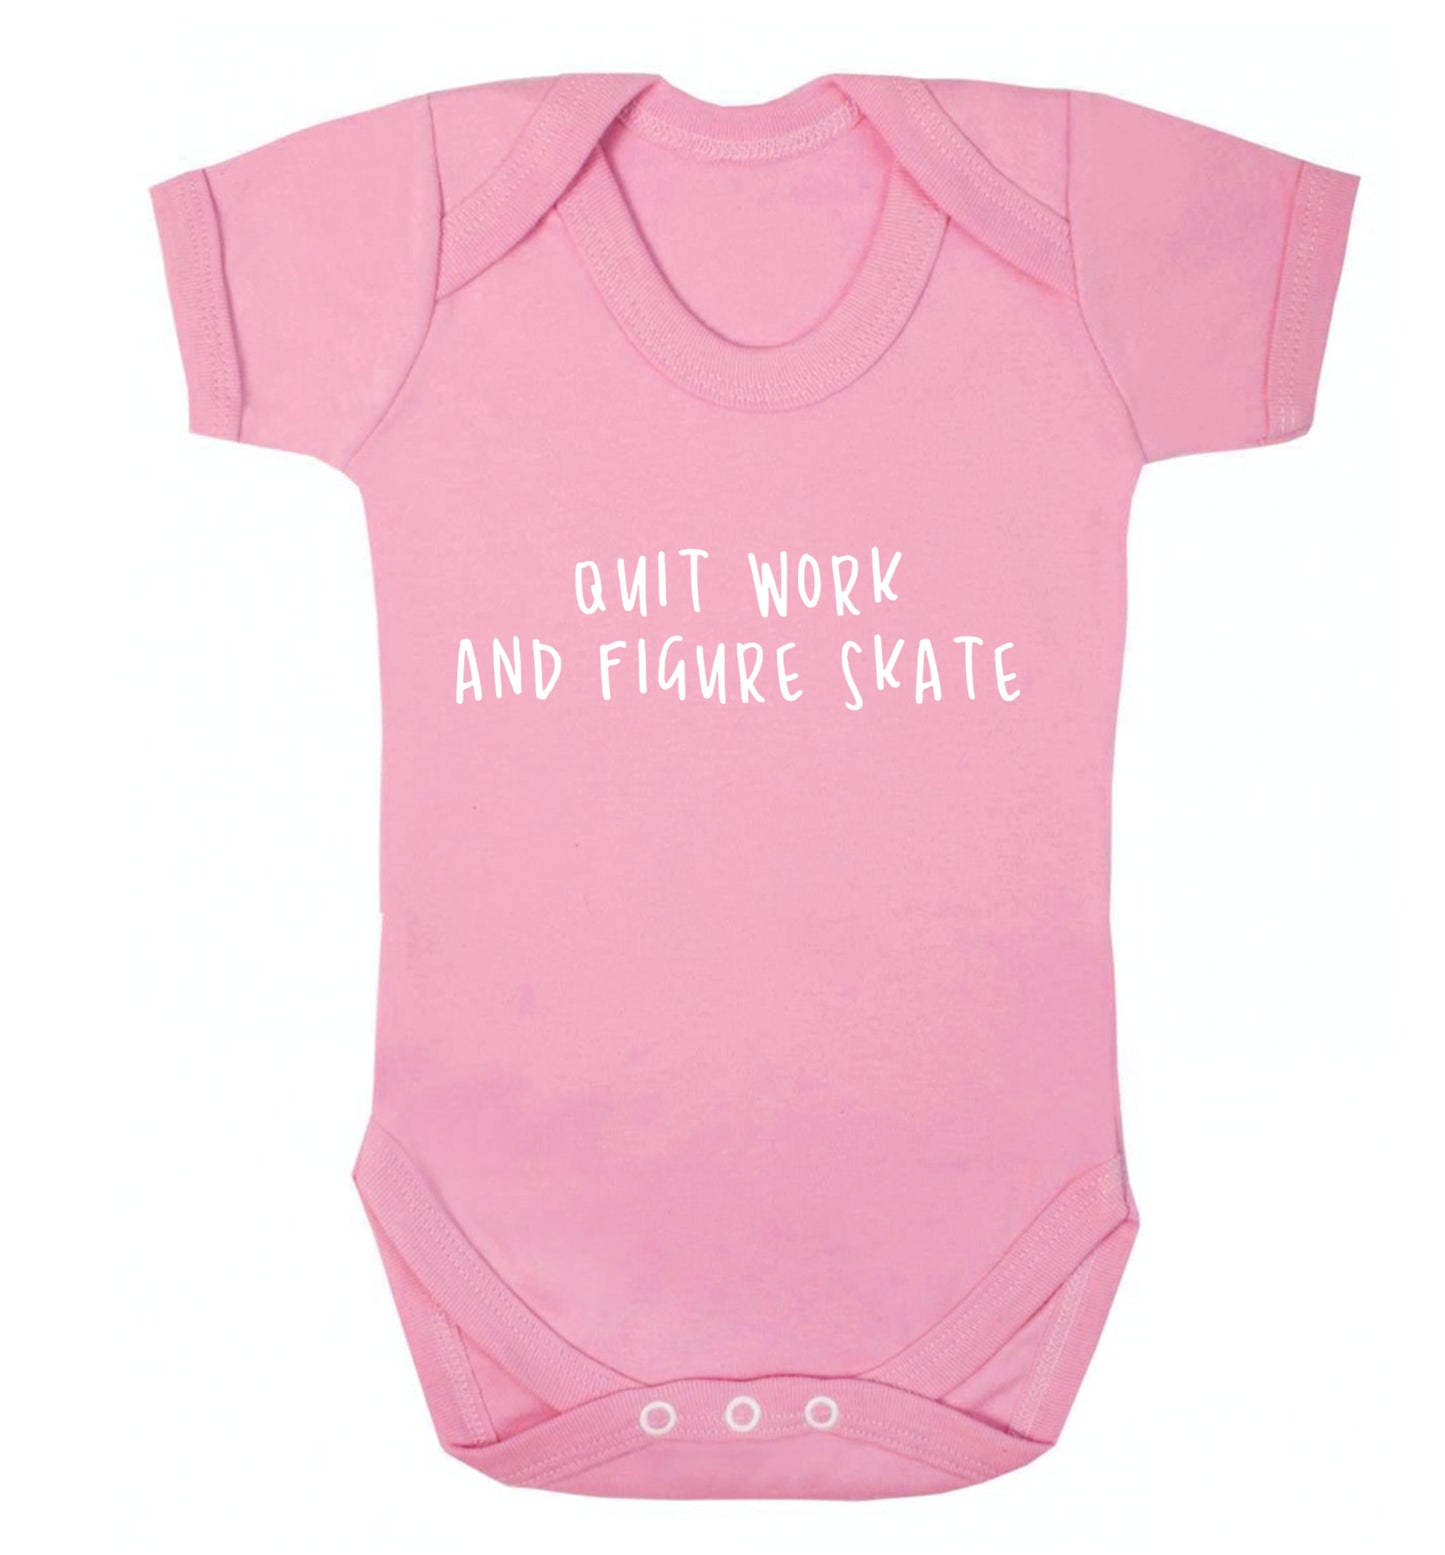 Quit work figure skate Baby Vest pale pink 18-24 months